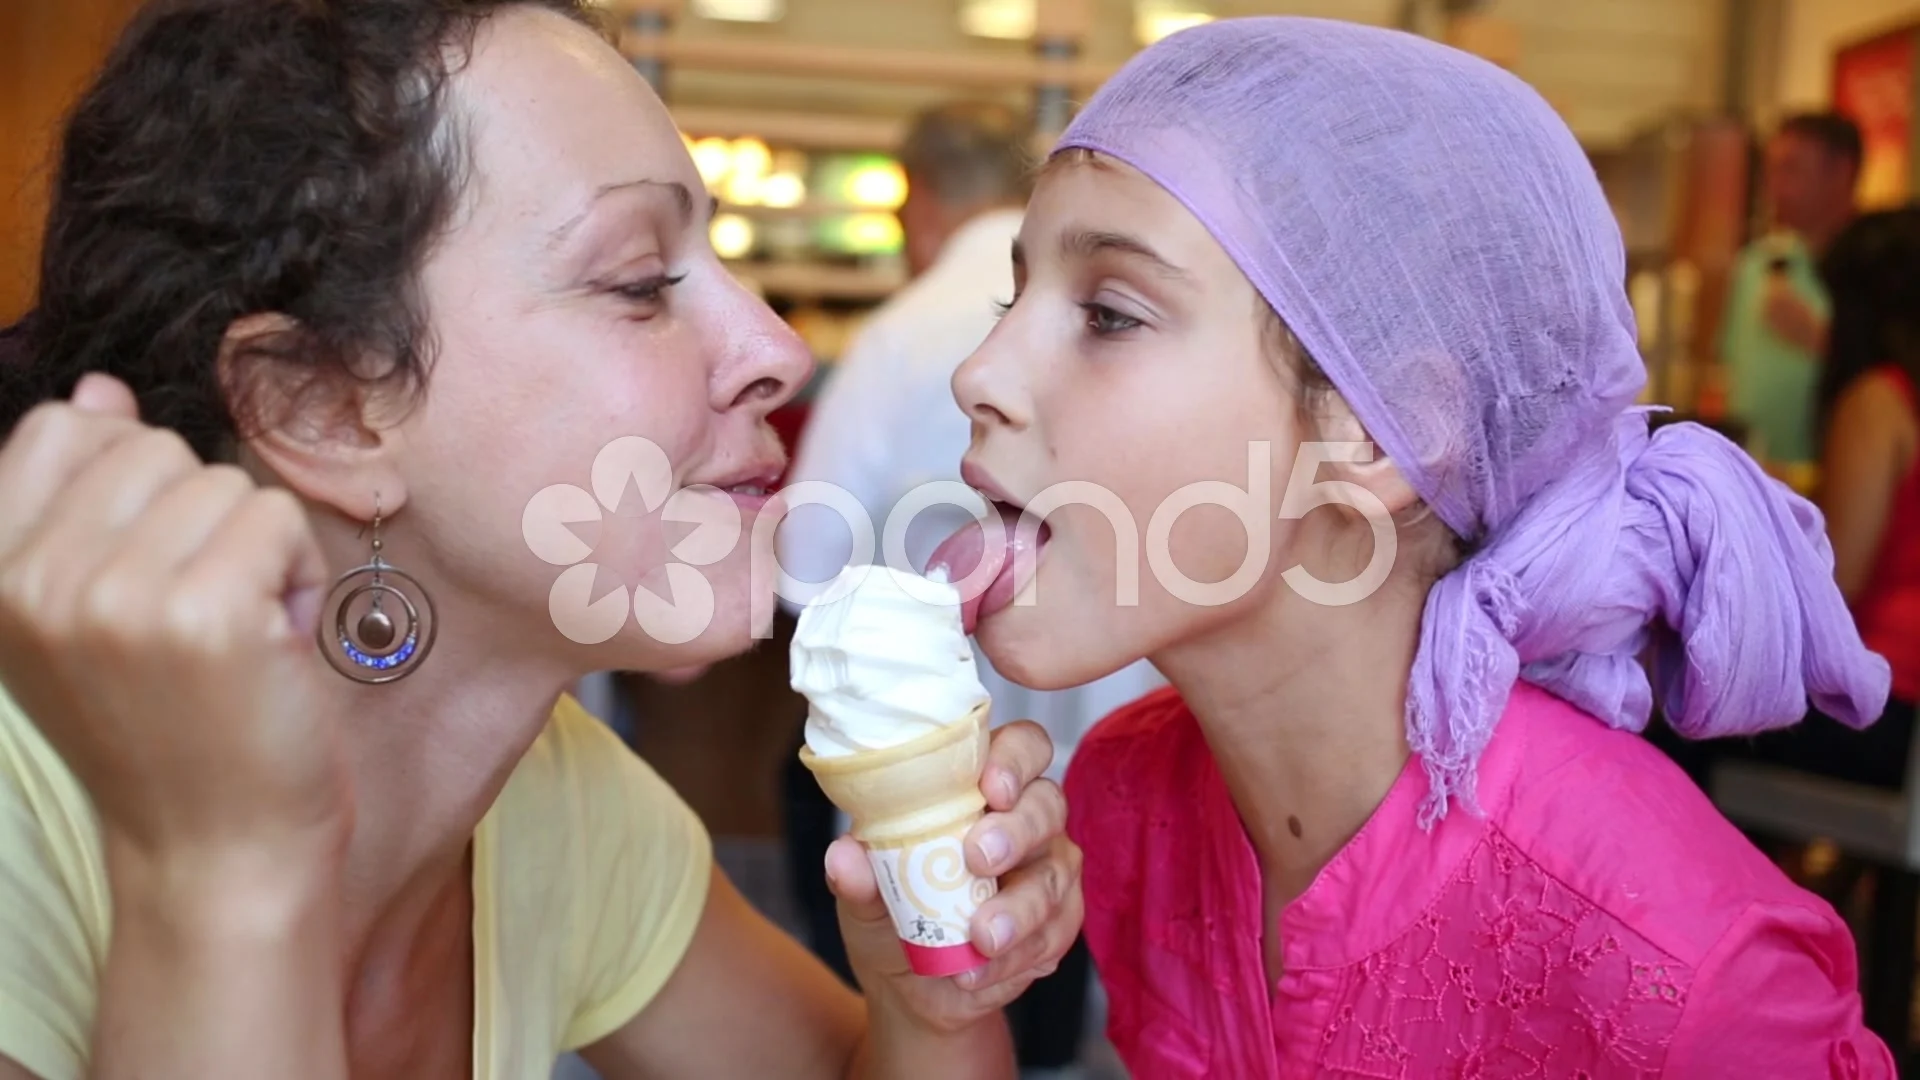 Mom daughter licking